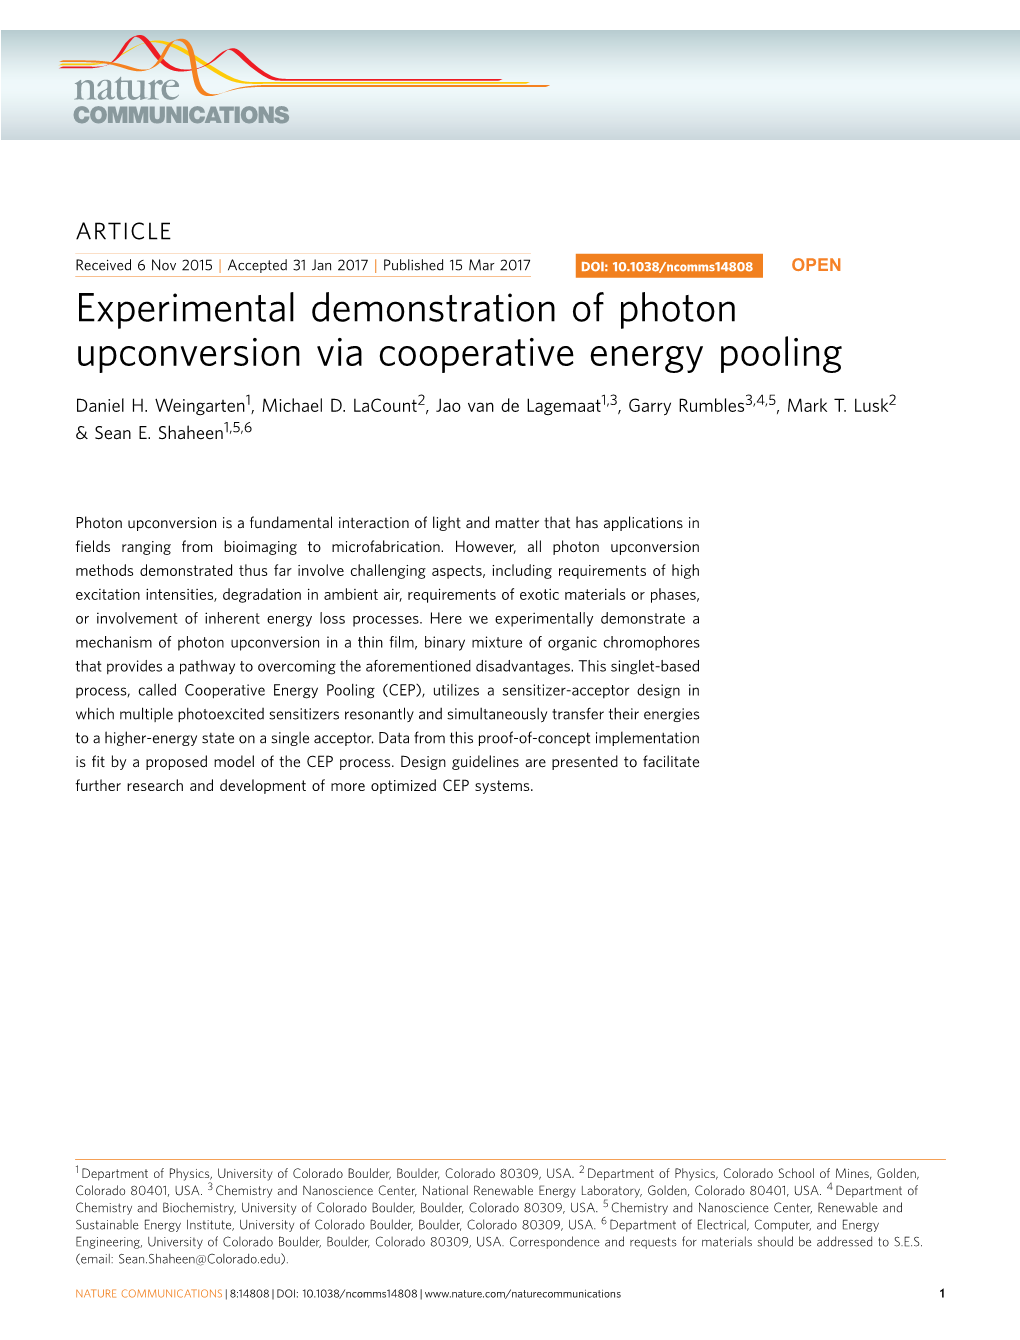 Experimental Demonstration of Photon Upconversion Via Cooperative Energy Pooling